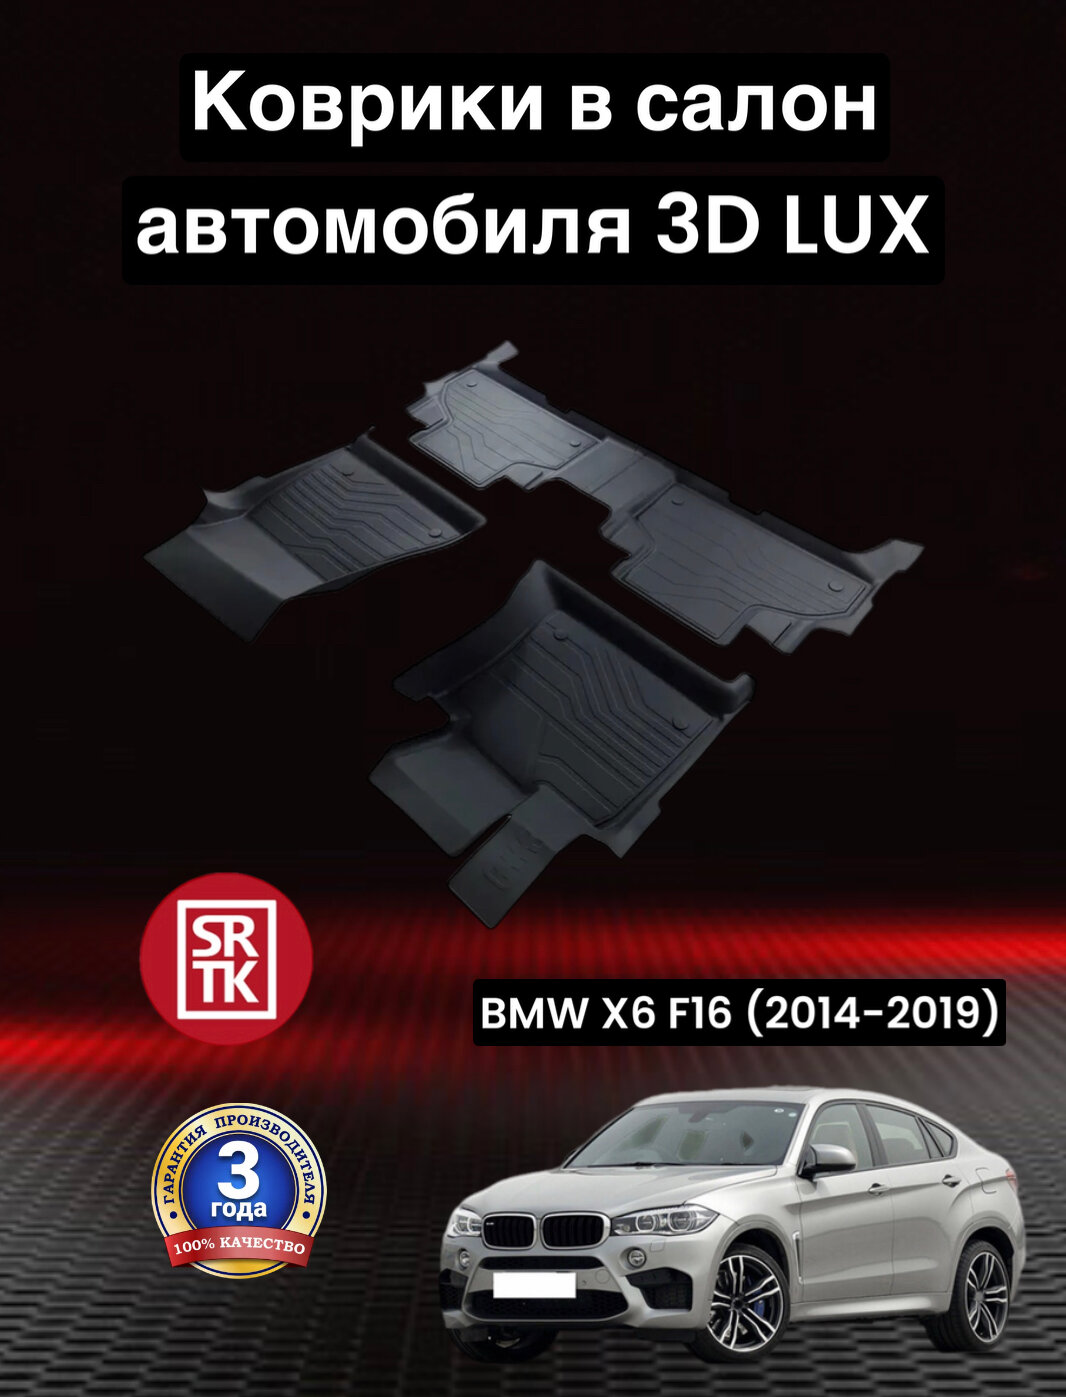 Коврики резиновые БМВ Х6 Ф16 (2014-2019)/БМВ Х6 F16 (2014-2019) 3D LUX SRTK (Саранск) комплект в салон